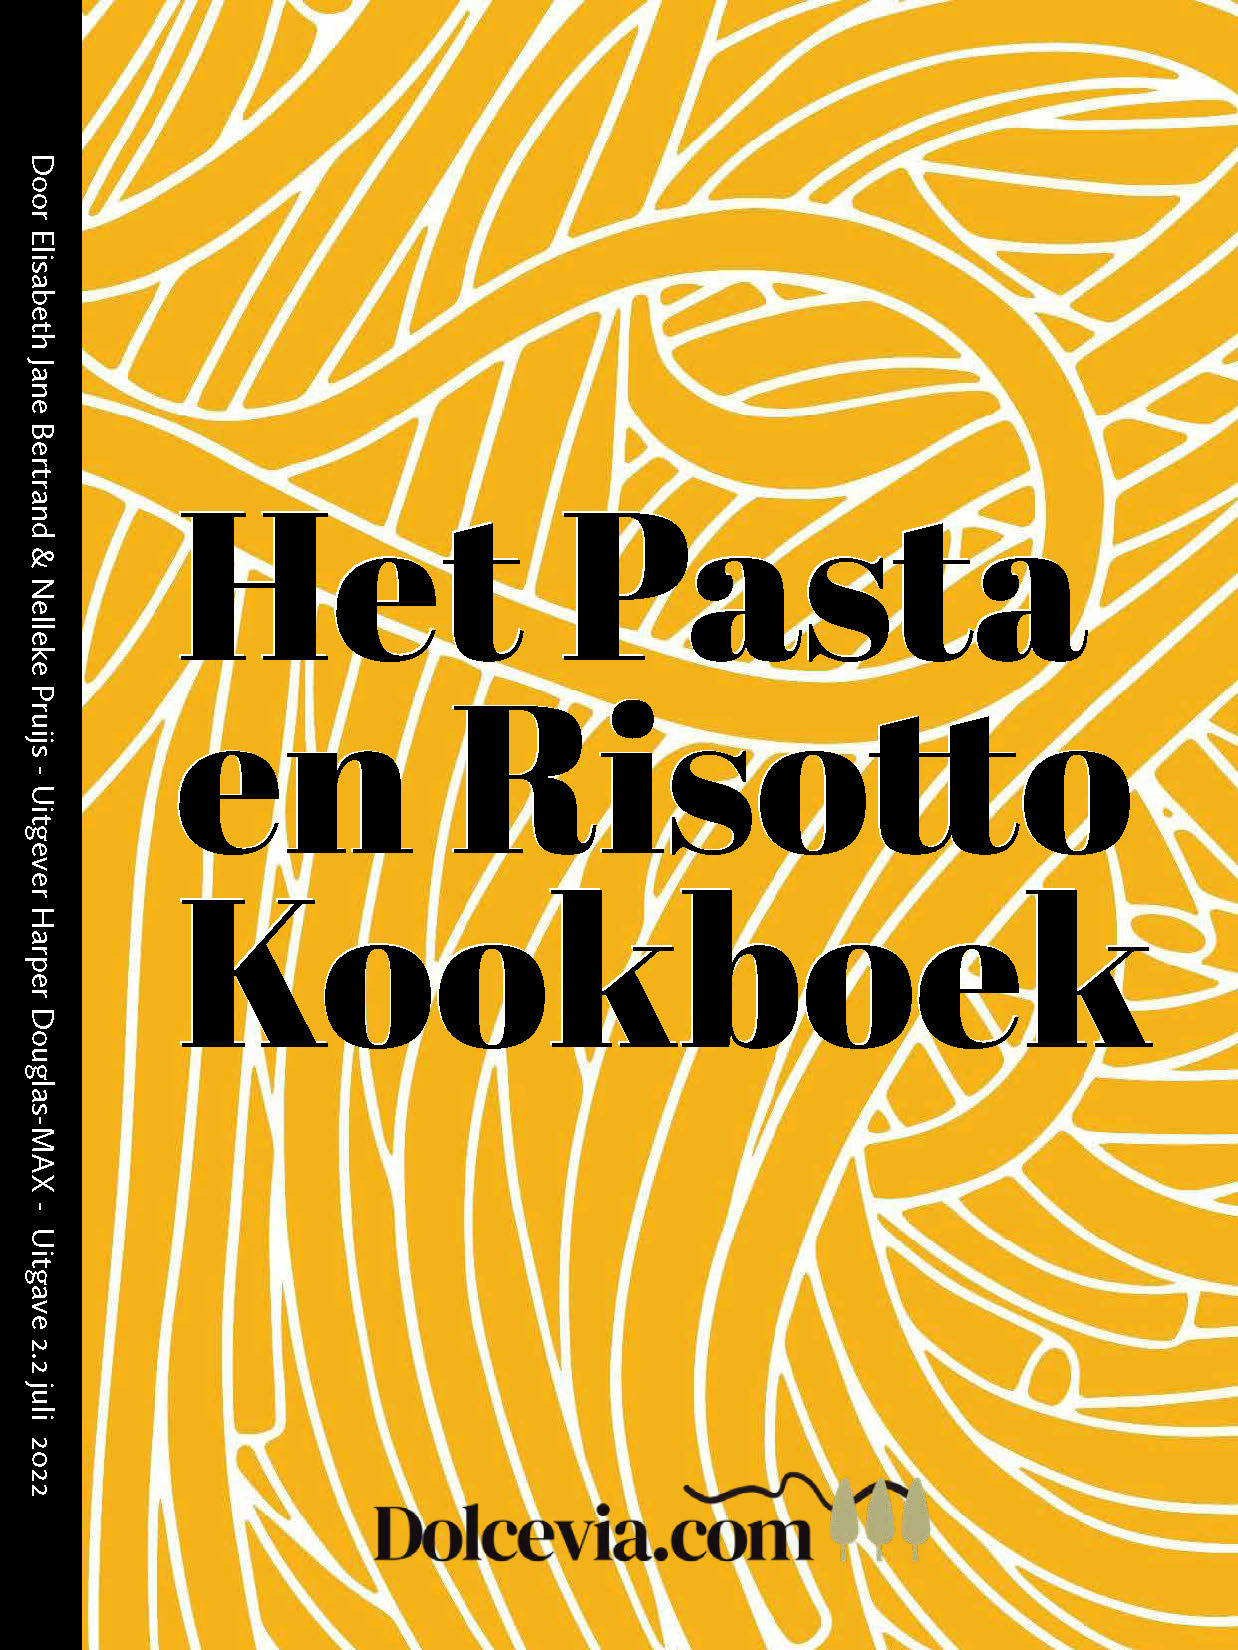 Pasta & Risotto kookboek van Dolcevia.com